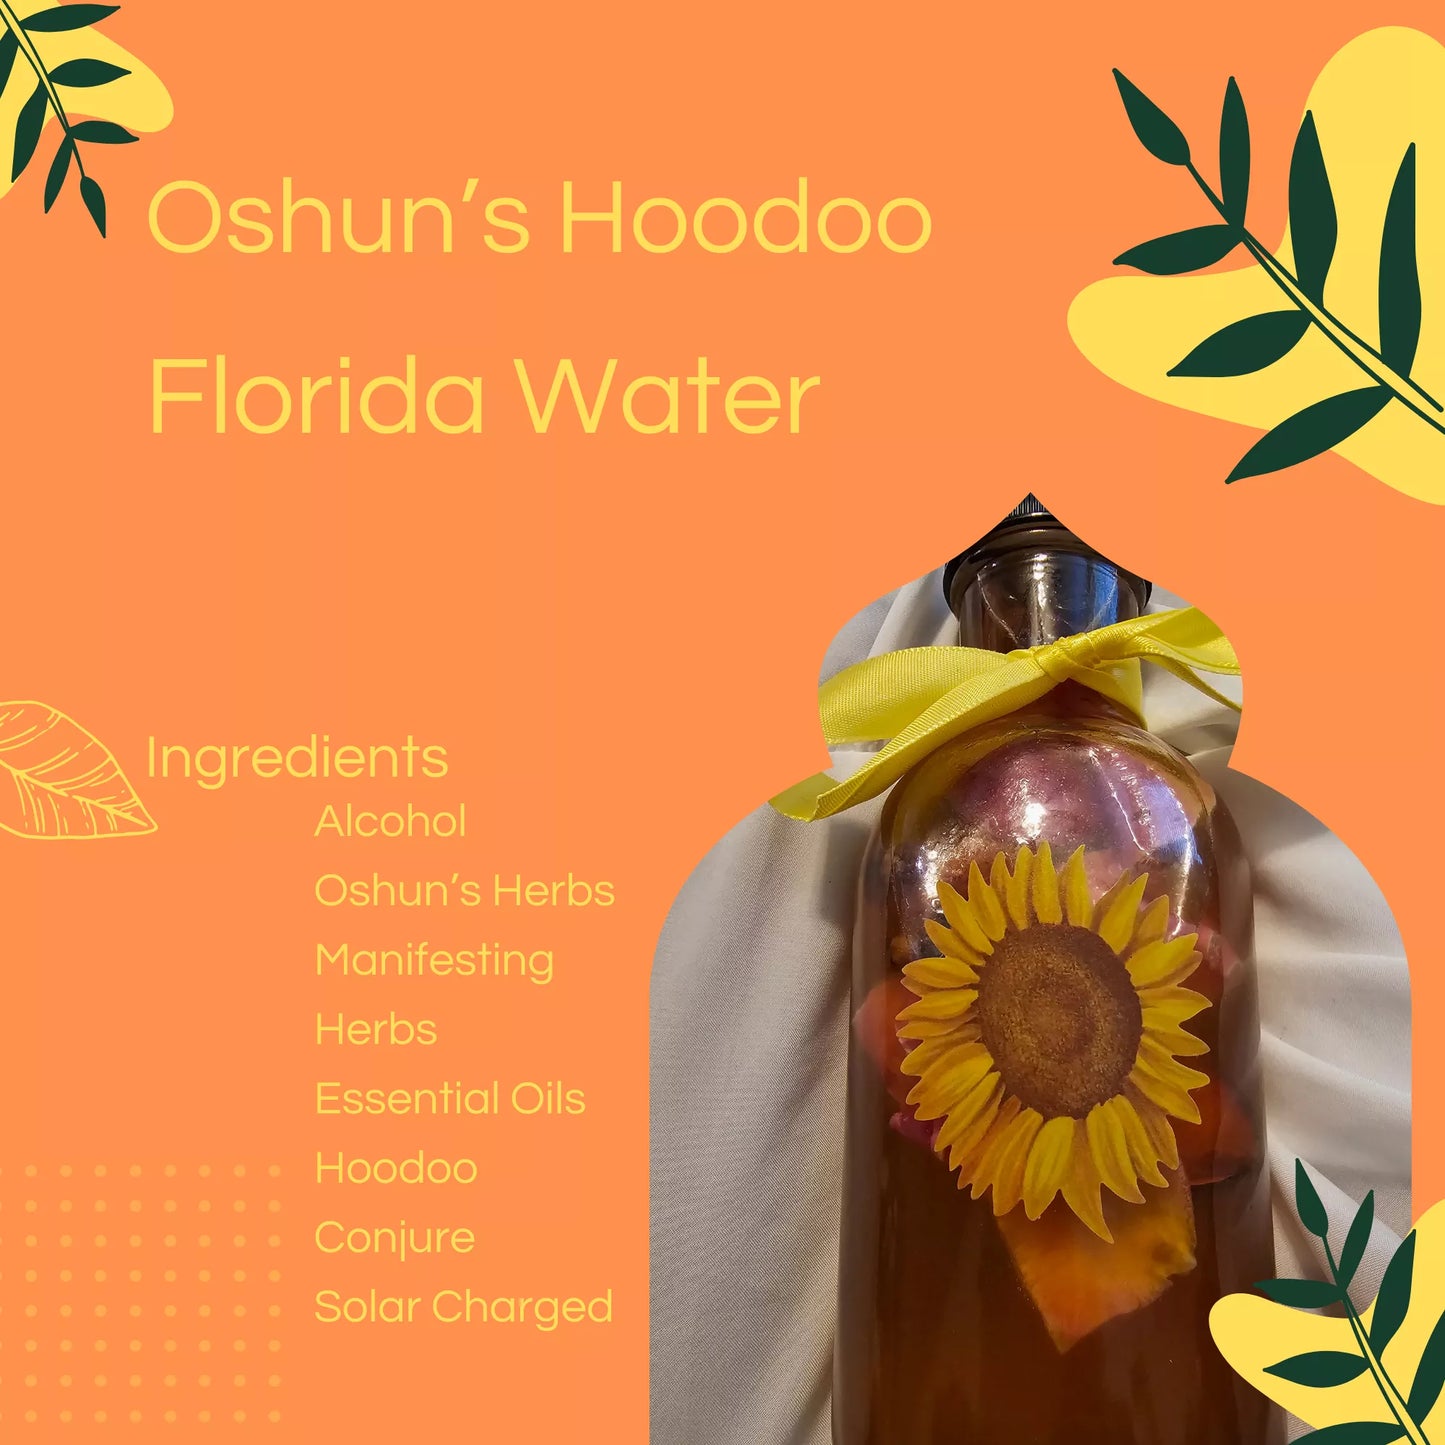 Oshun's Hoodoo Florida Water